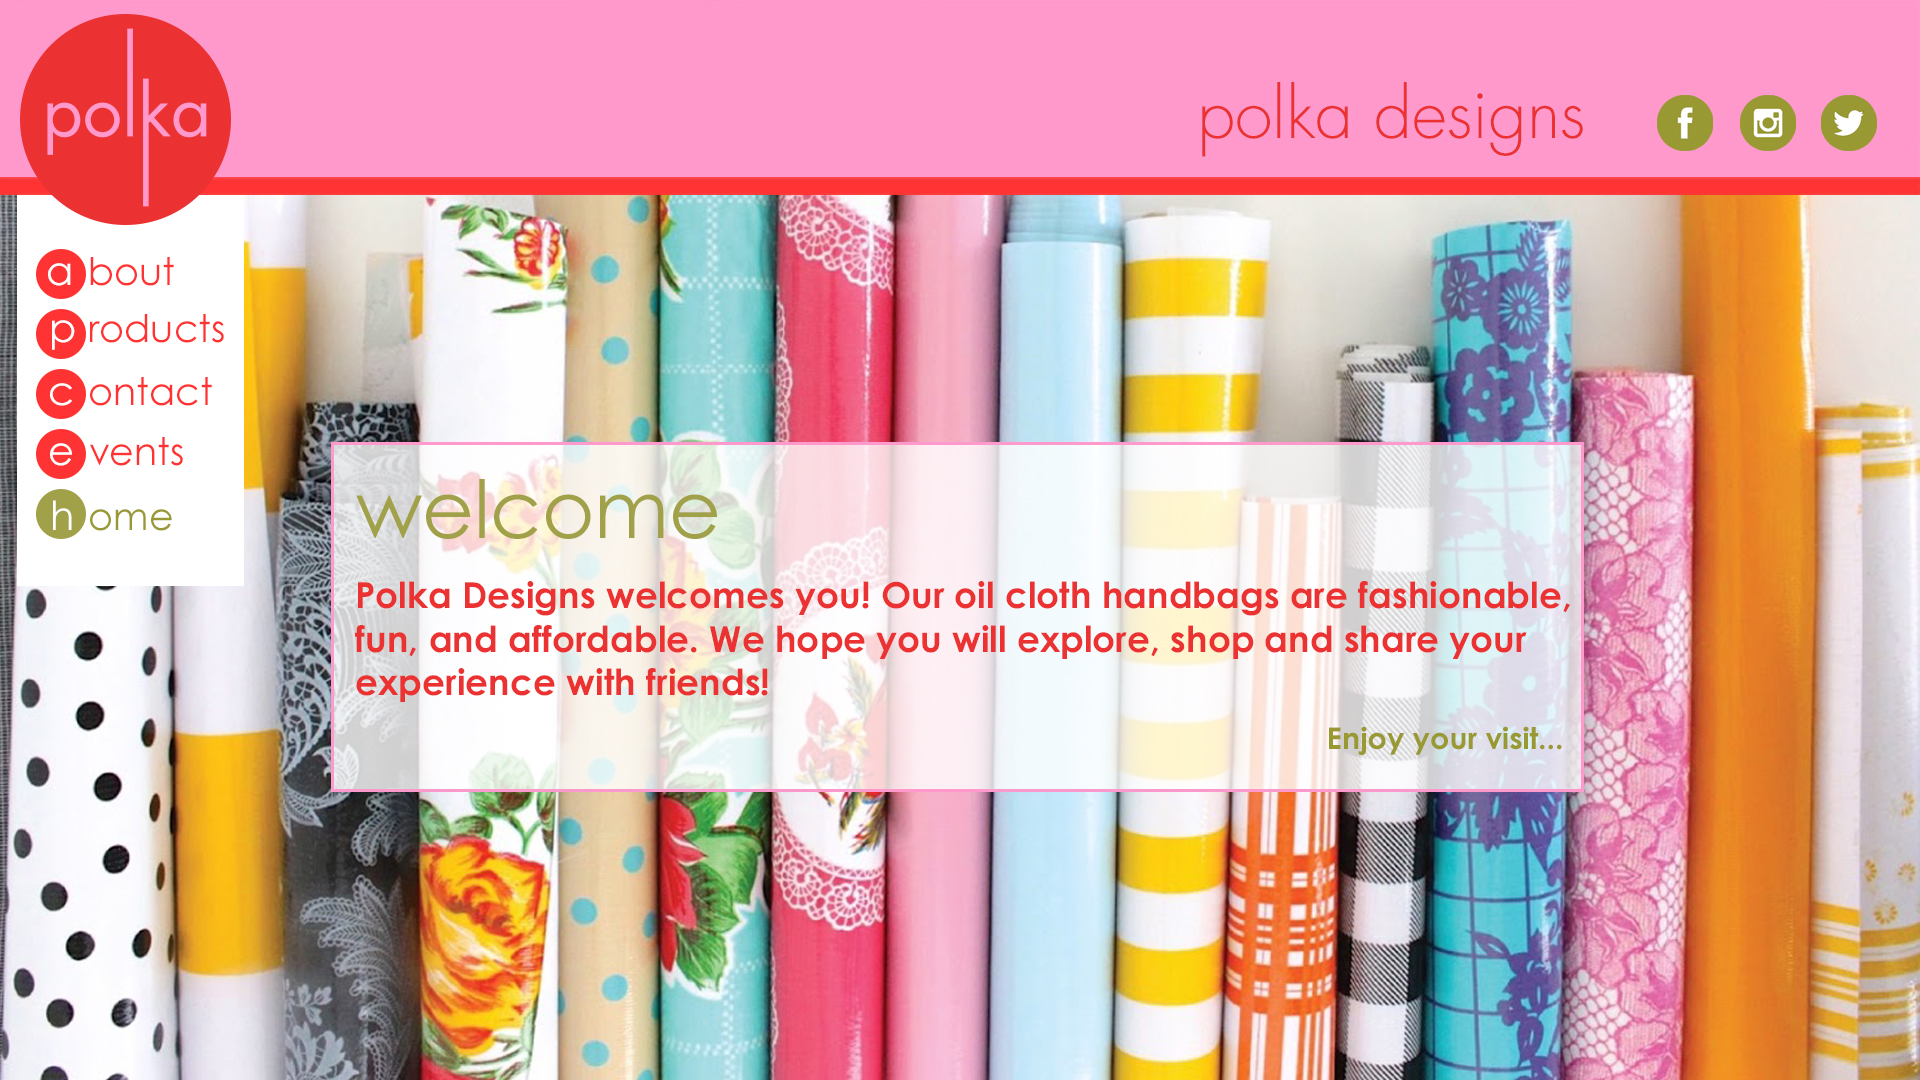   Website Concept  POLKA DESIGNS Oilcloth handbags and accessories  